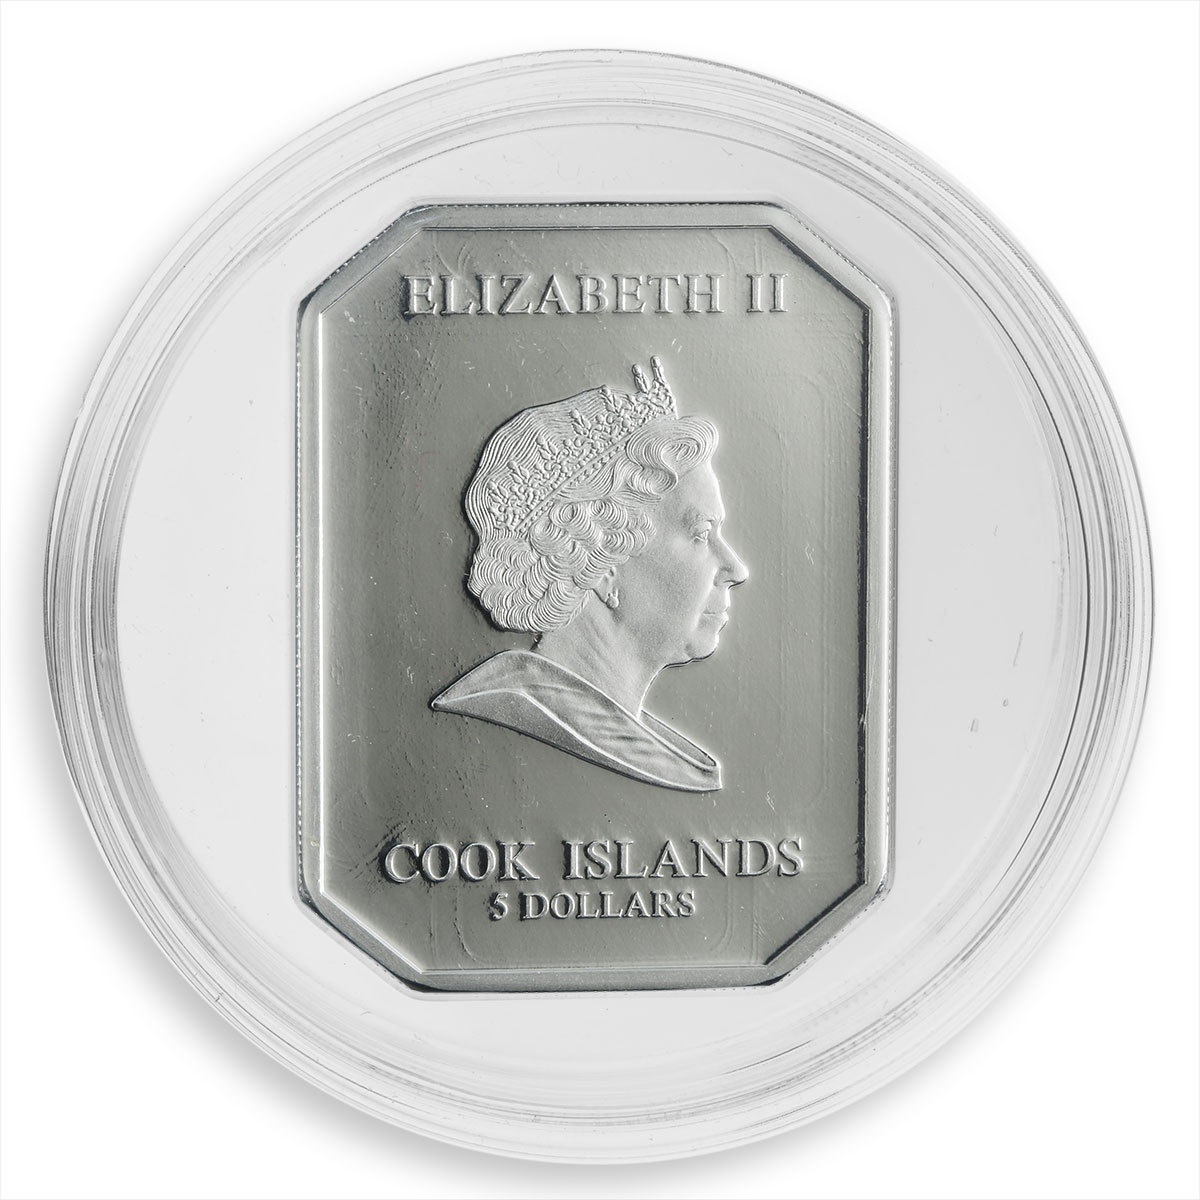 Cook Islands 5 dollars Vatican Art The Pieta Swarovski crystal silver coin 2009